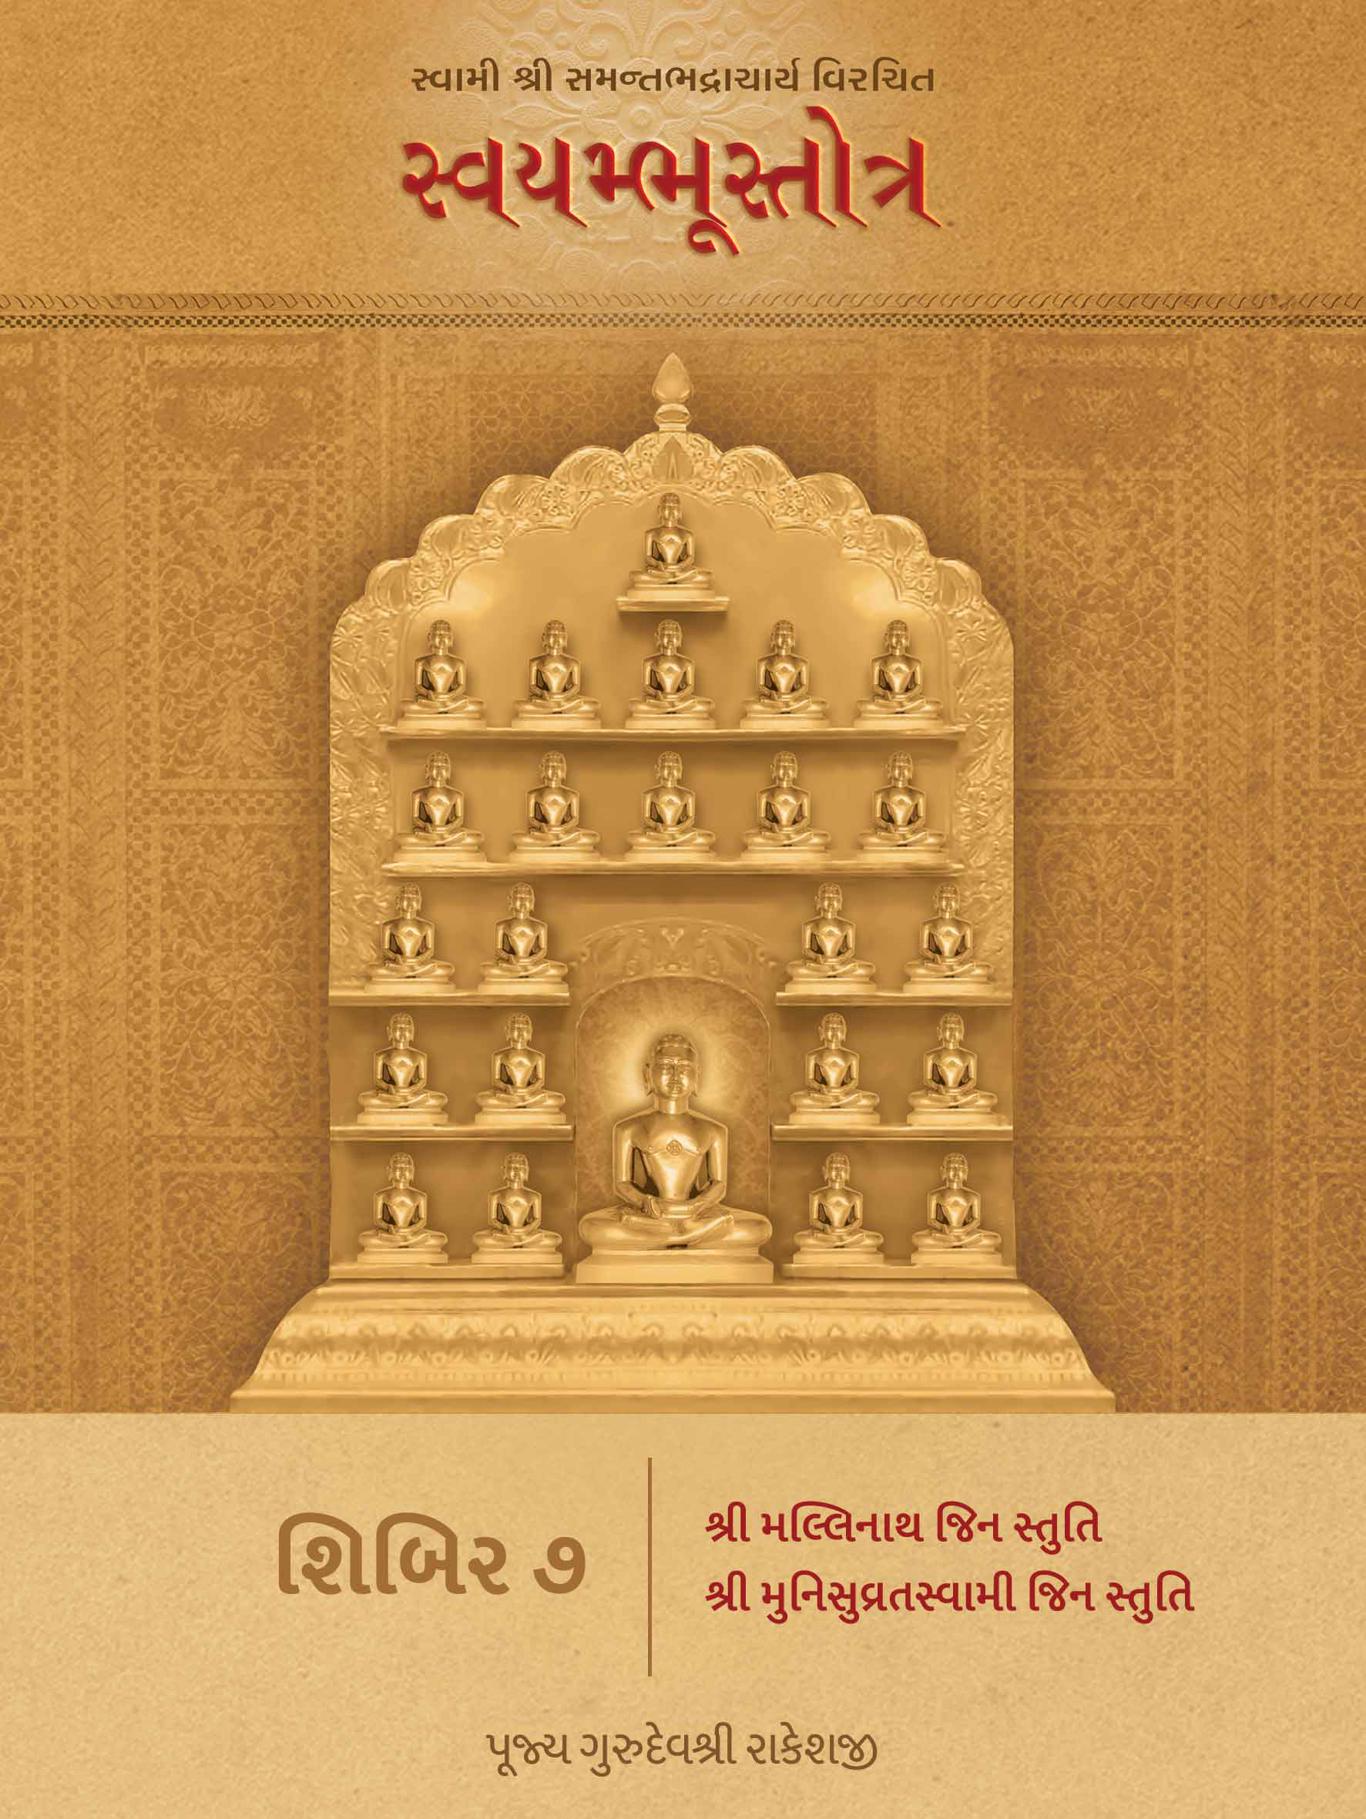 Swami Shri Samantbhadracharya Virachit Swayambhustotra - Shibir 7